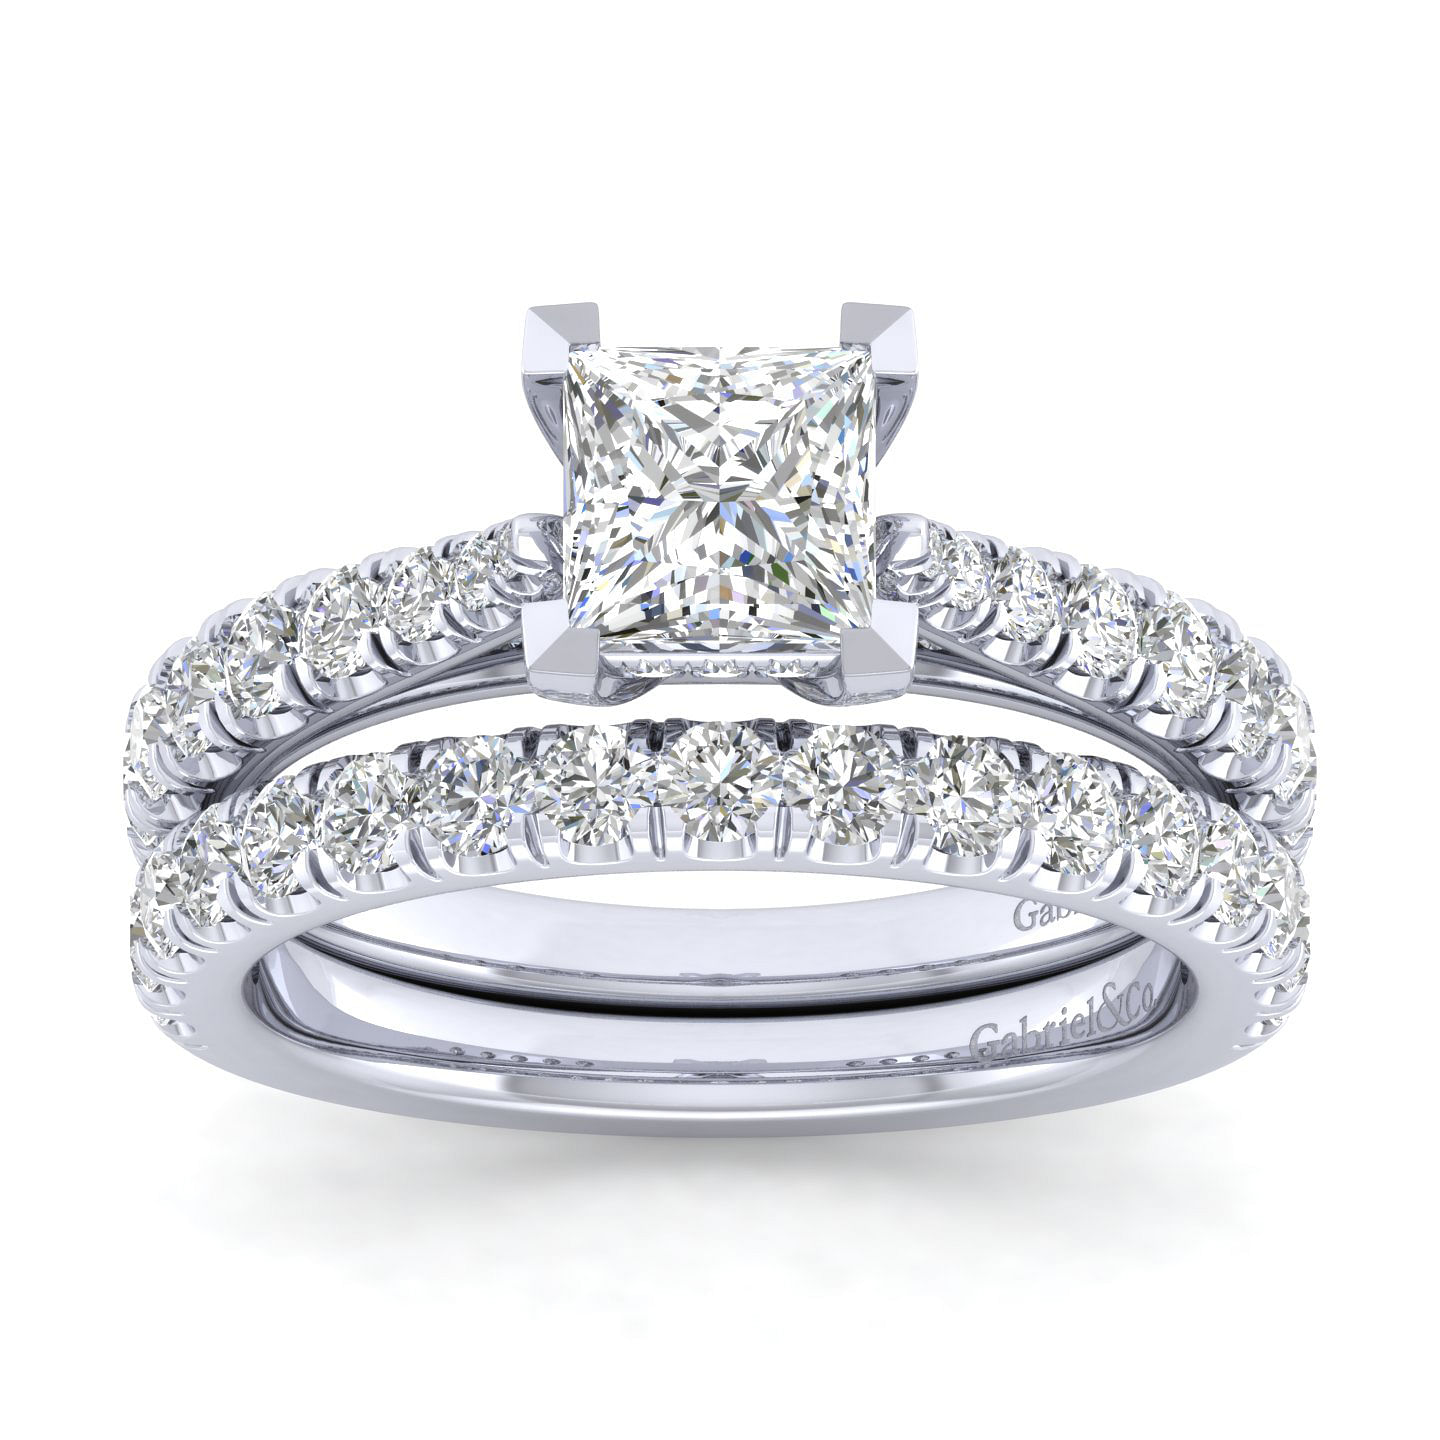 Avery - 14K White Gold Princess Cut Diamond Engagement Ring - 0.53 ct - Shot 4